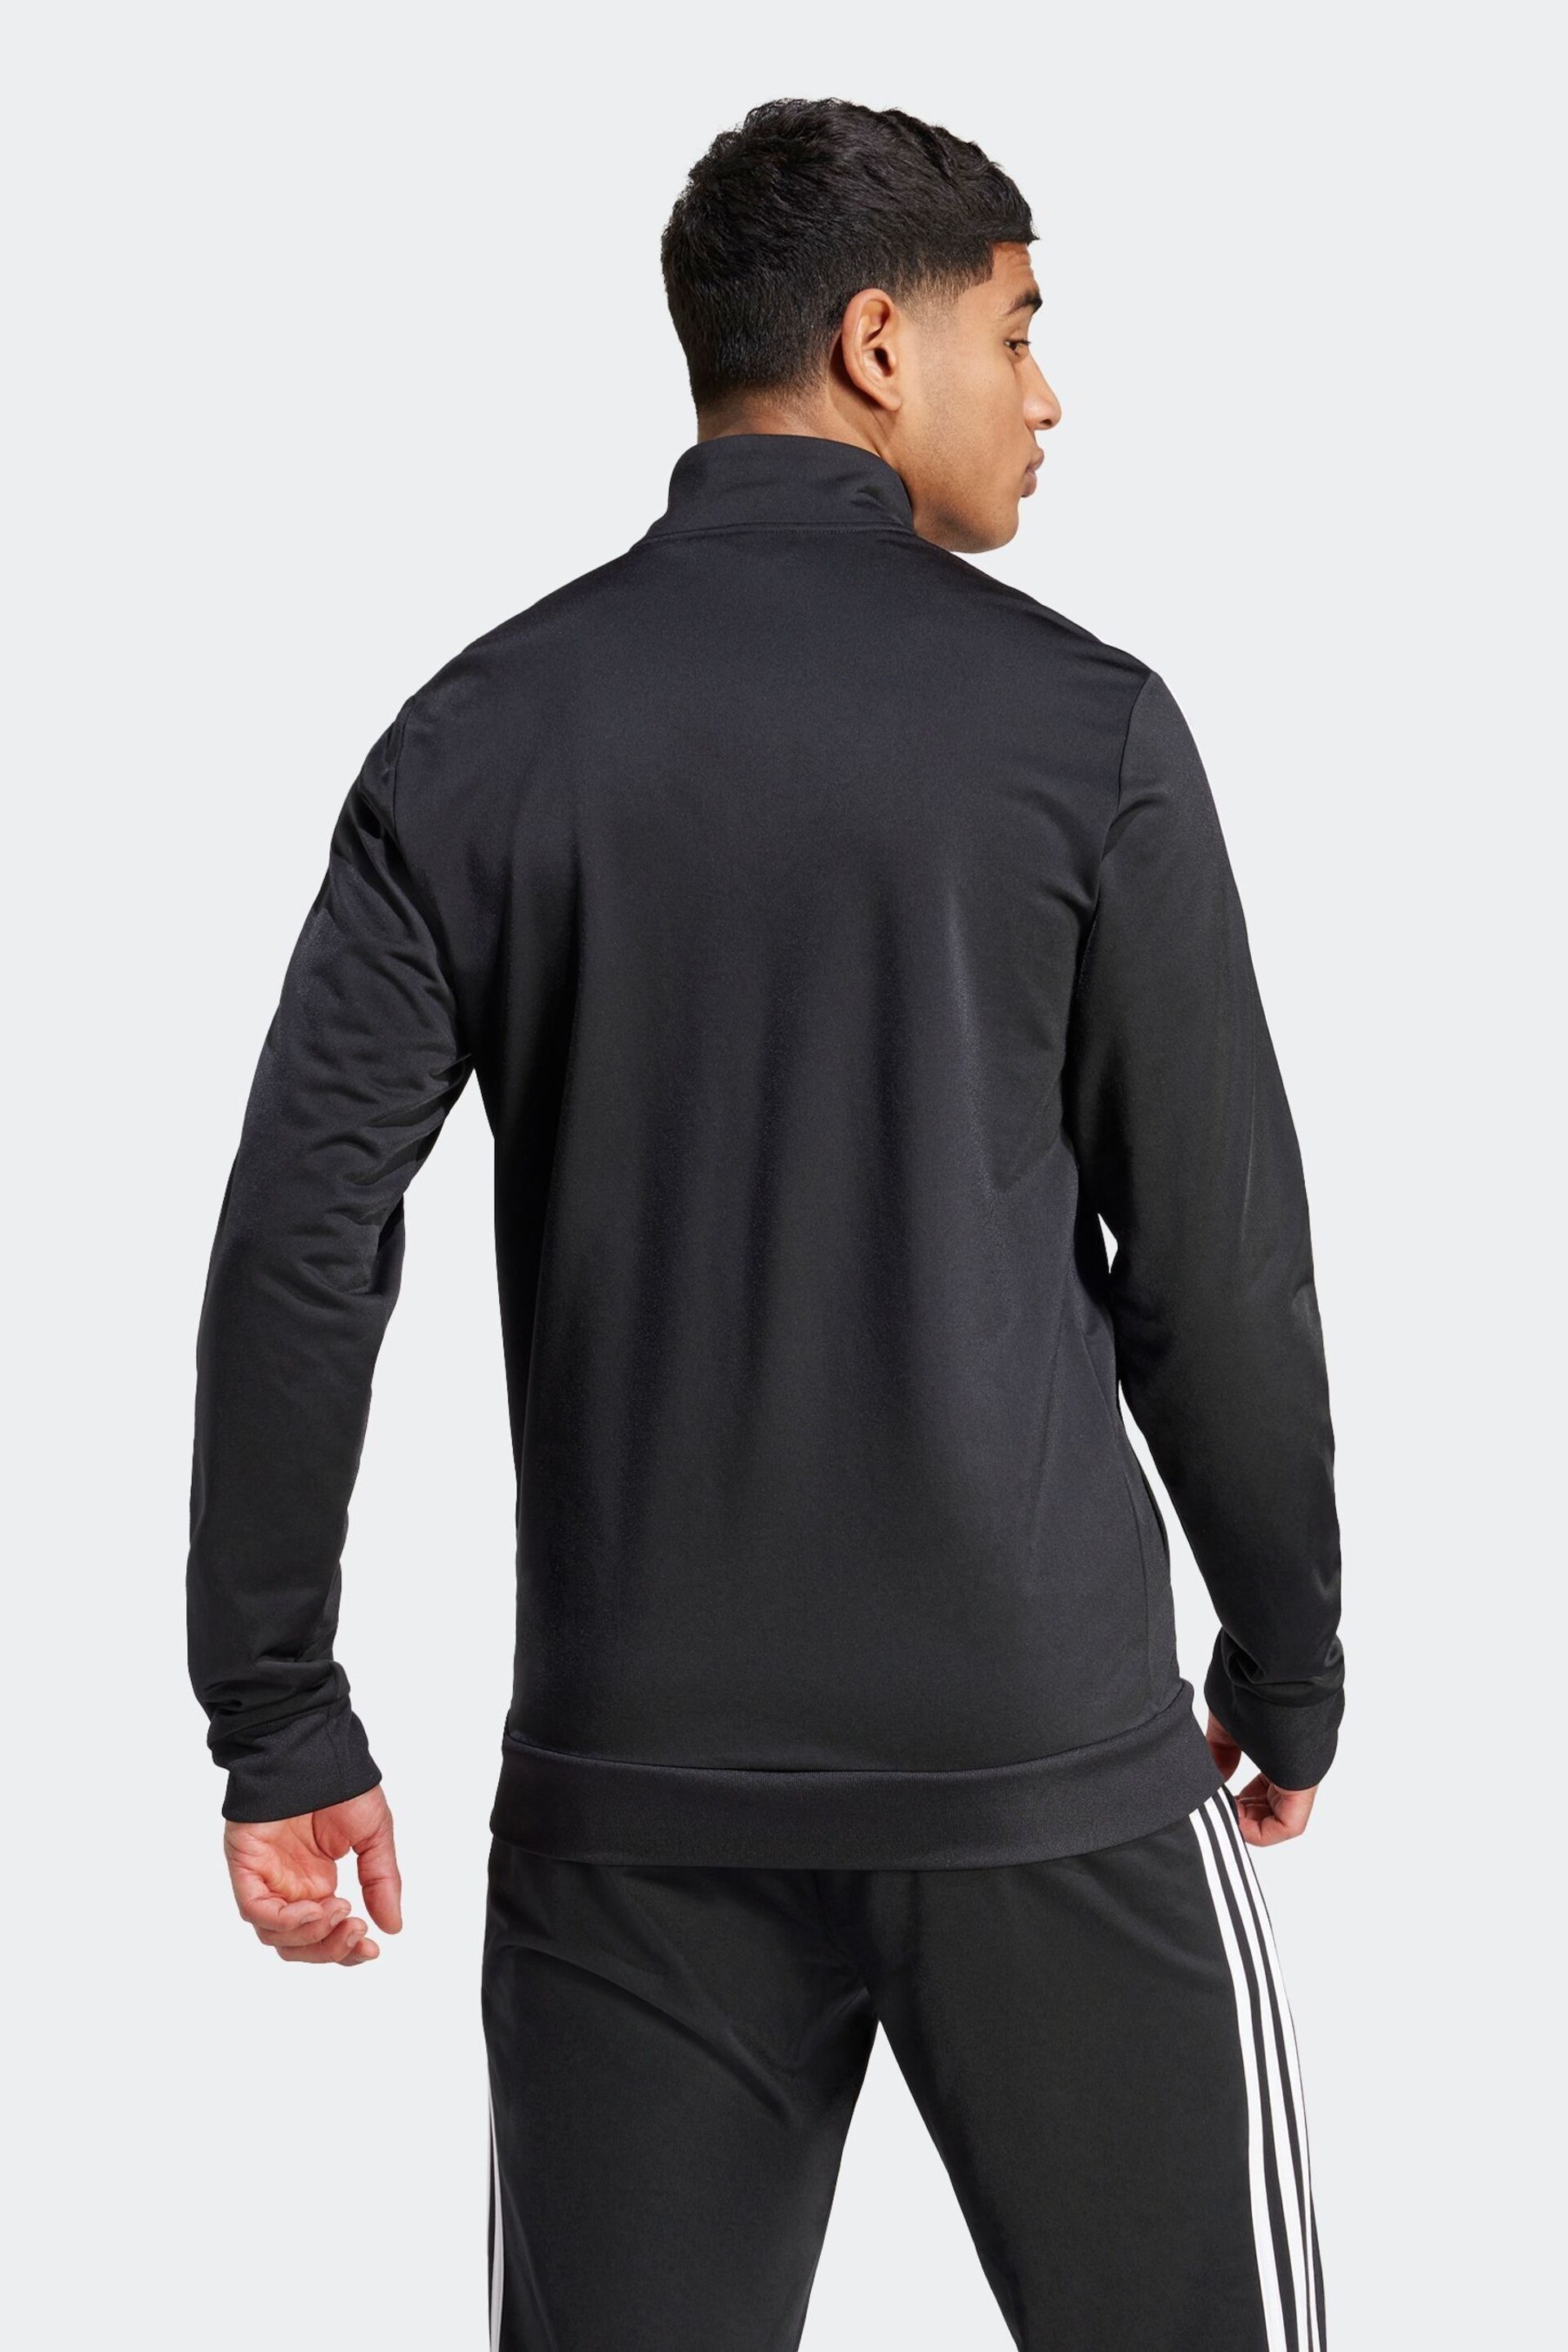 adidas Black Sportswear Essentials Warm Up 3 Stripes Track Top - Image 2 of 6